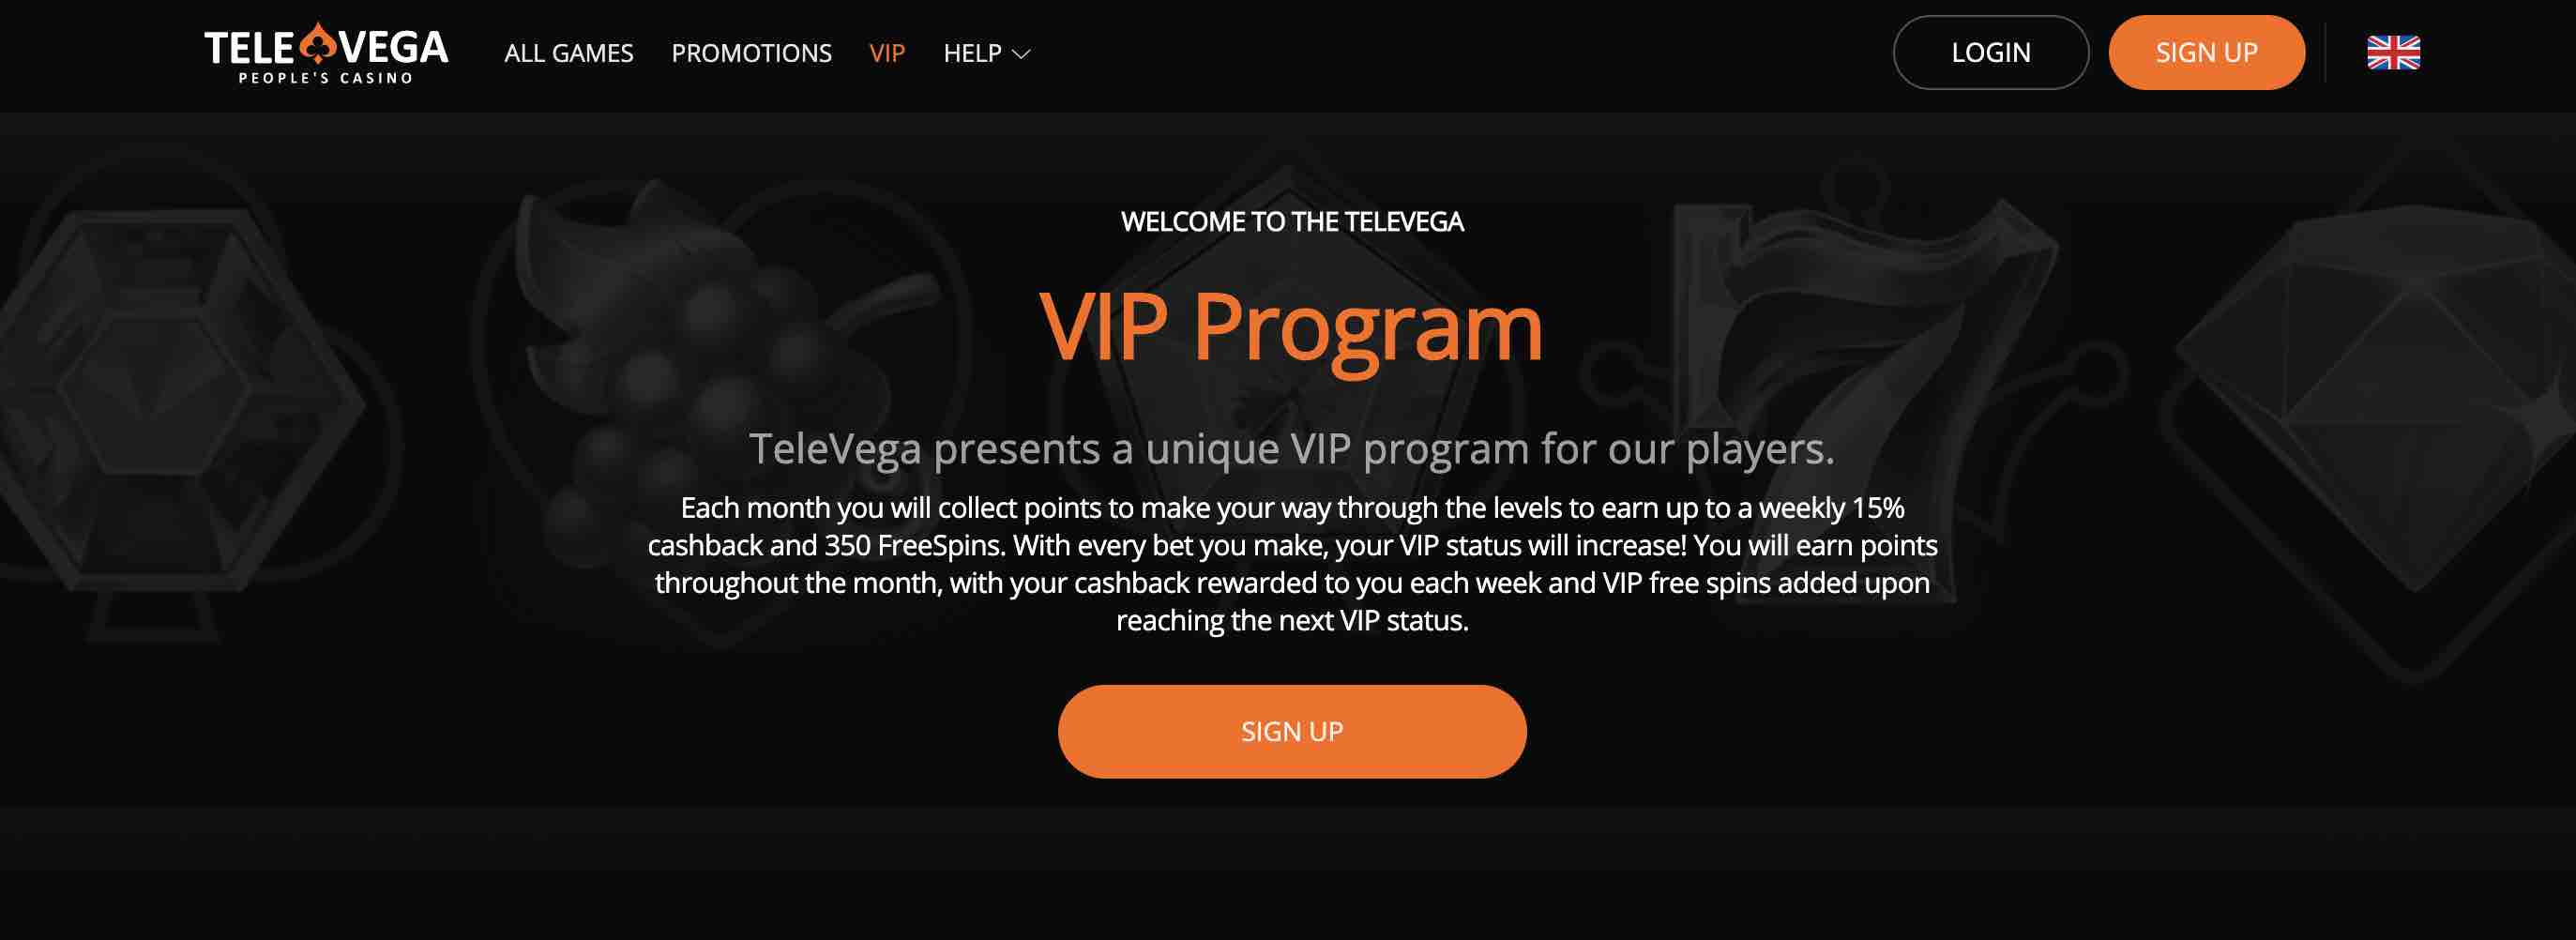 TeleVega Casino VIP Program